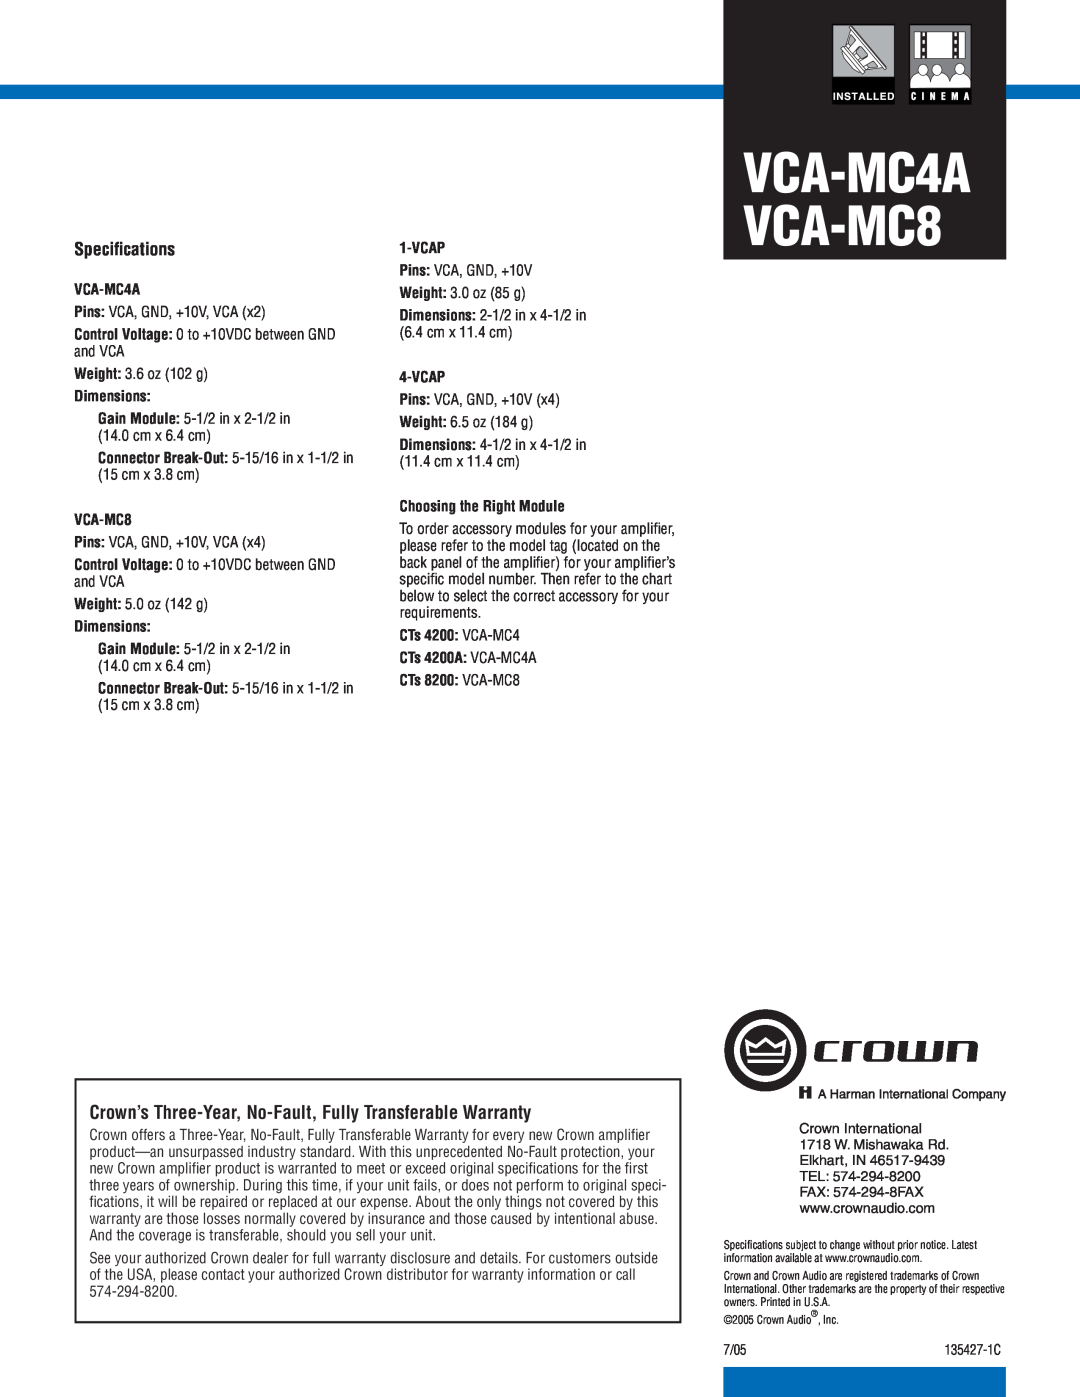 Crown Audio manual VCA-MC4A VCA-MC8, Speciﬁcations 